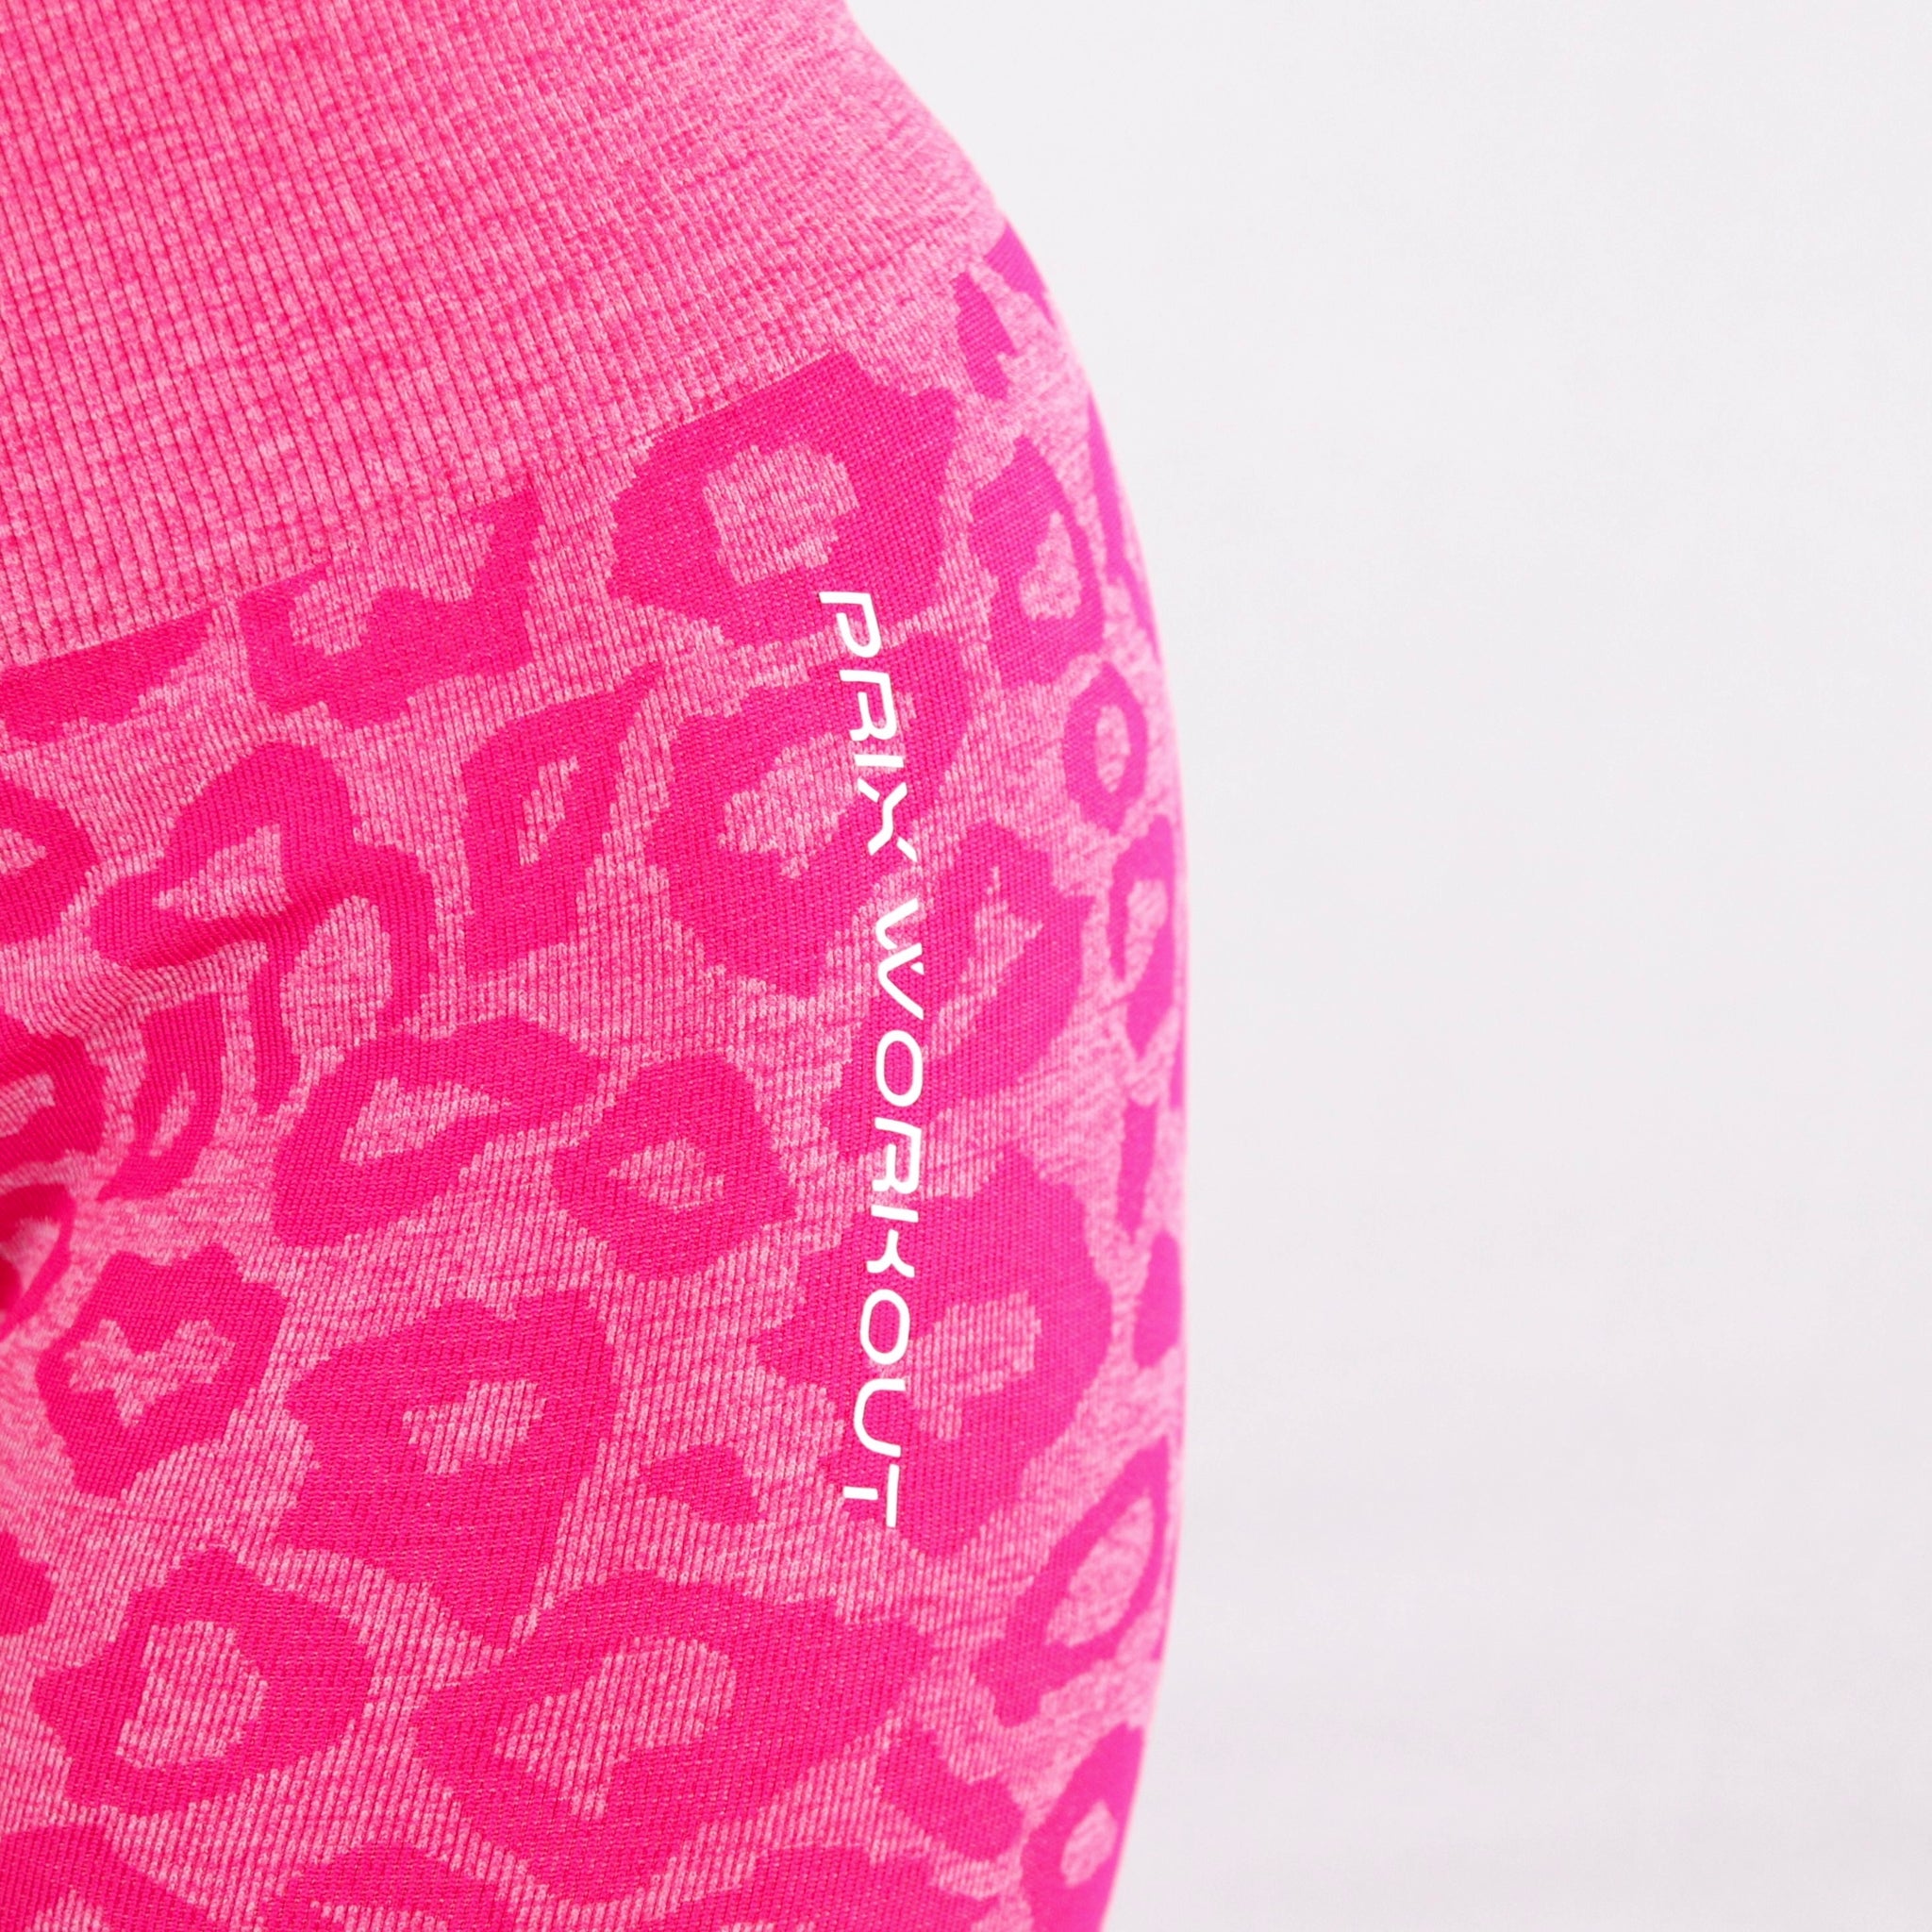 Vanille pink leopard print sports leggings Waist S Colour Léopard rose  Waist S Colour Léopard rose